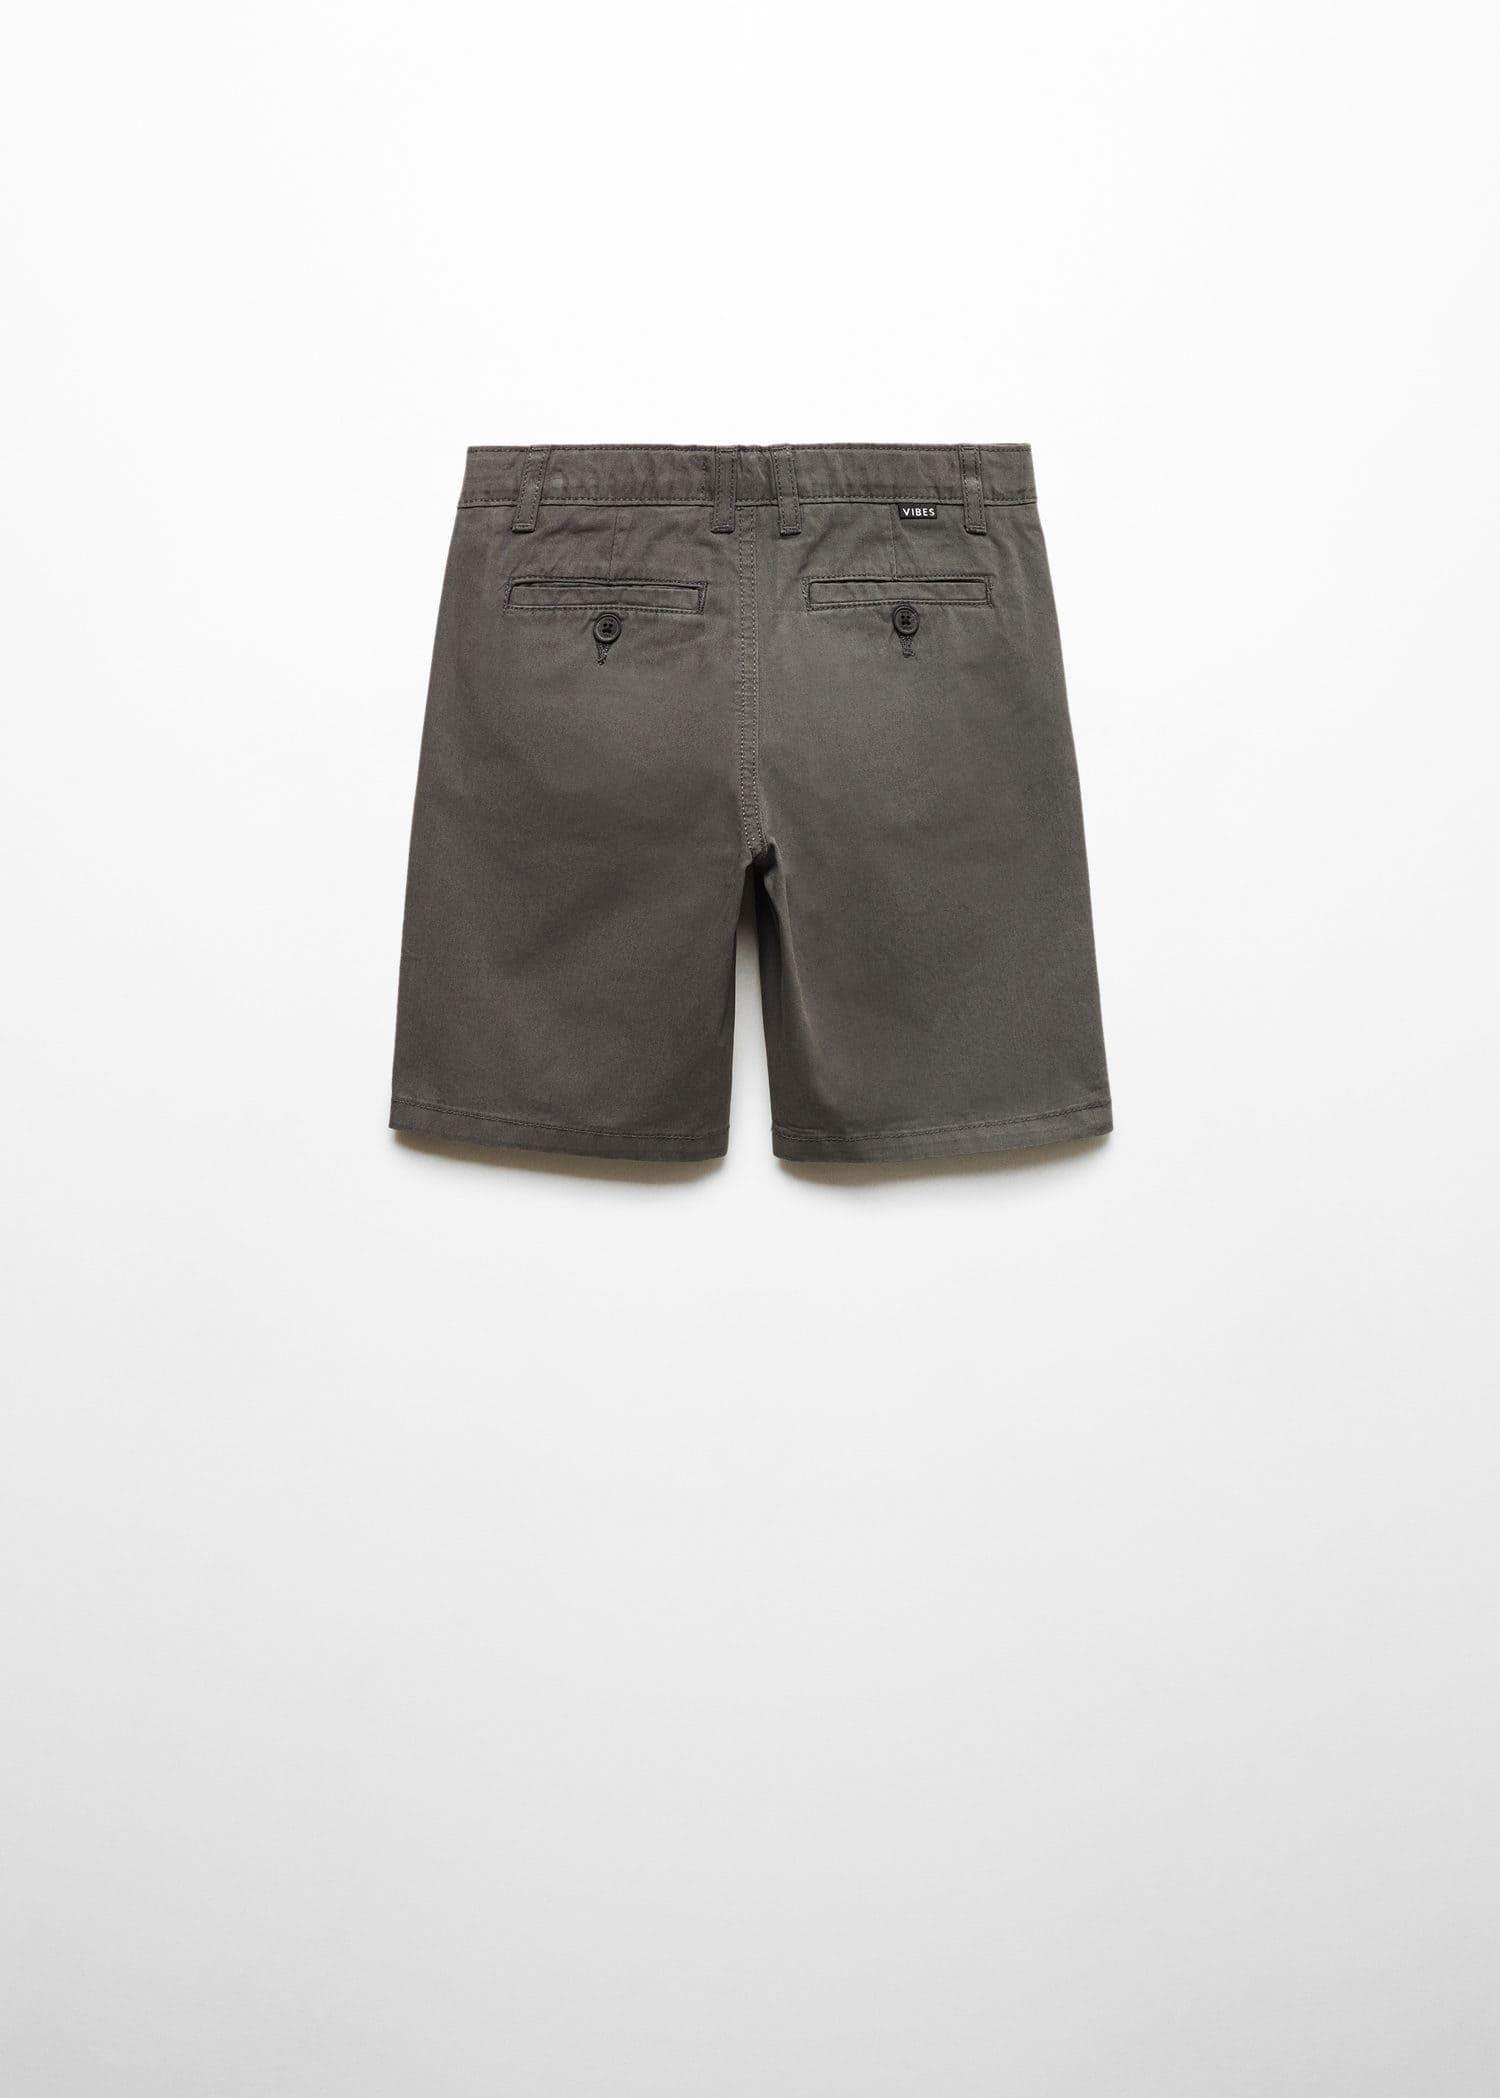 Mango - Grey Cotton Bermuda Shorts, Kids Boys